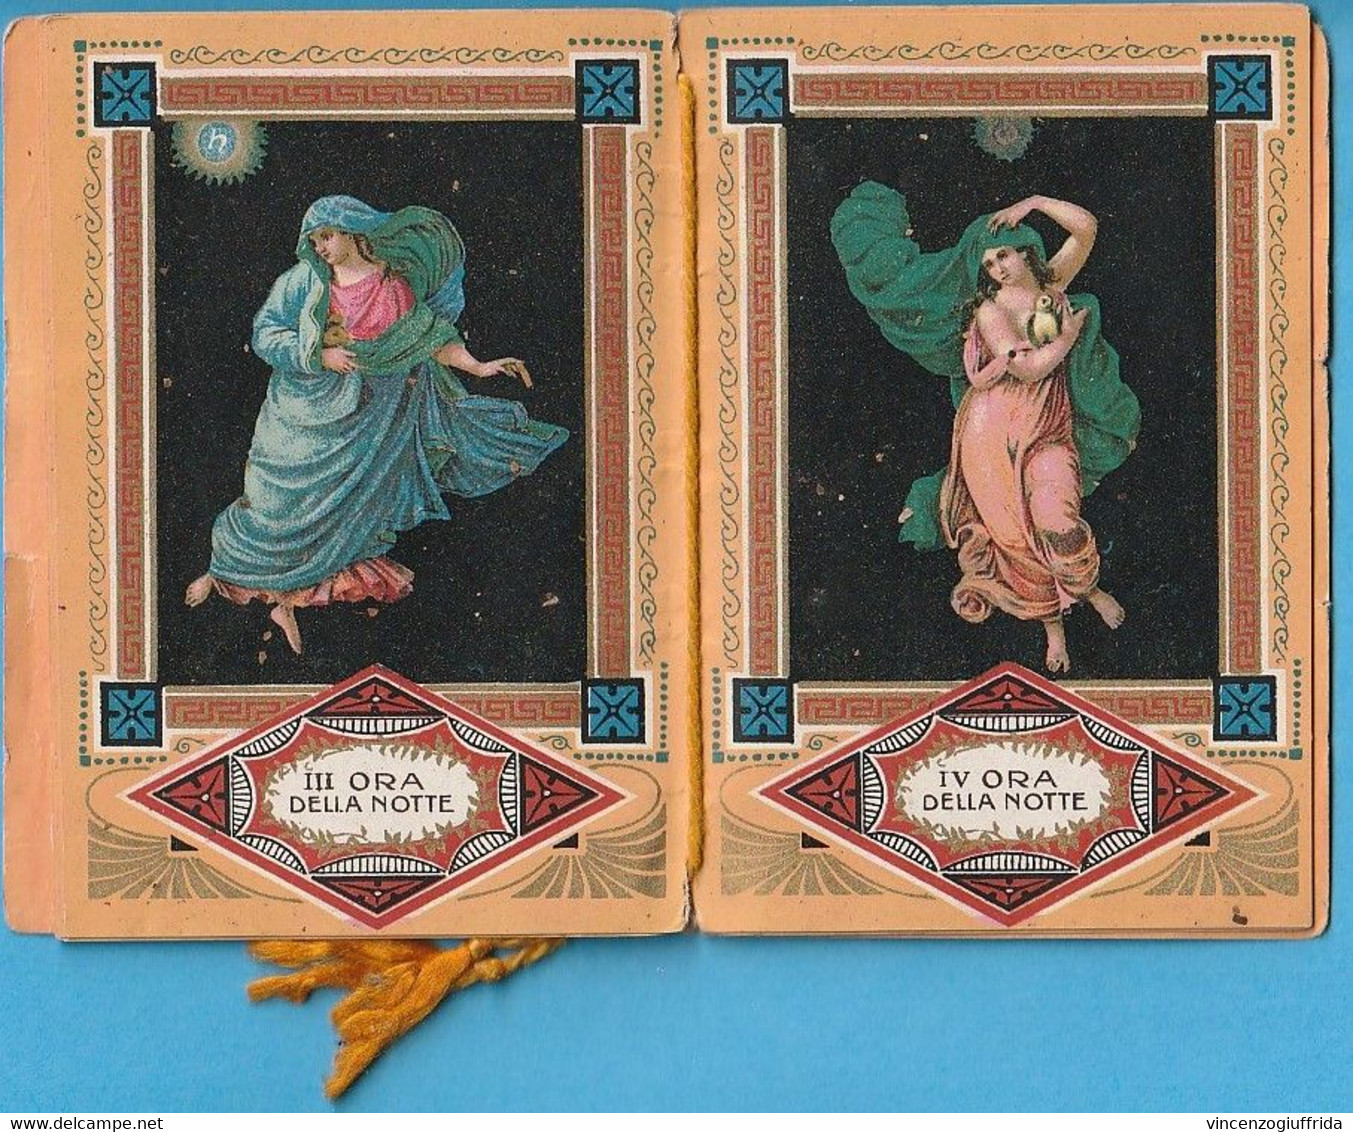 Calendarietto Barbiere Le Meraviglie Di Pompei Rancè 1922 - Petit Format : 1901-20